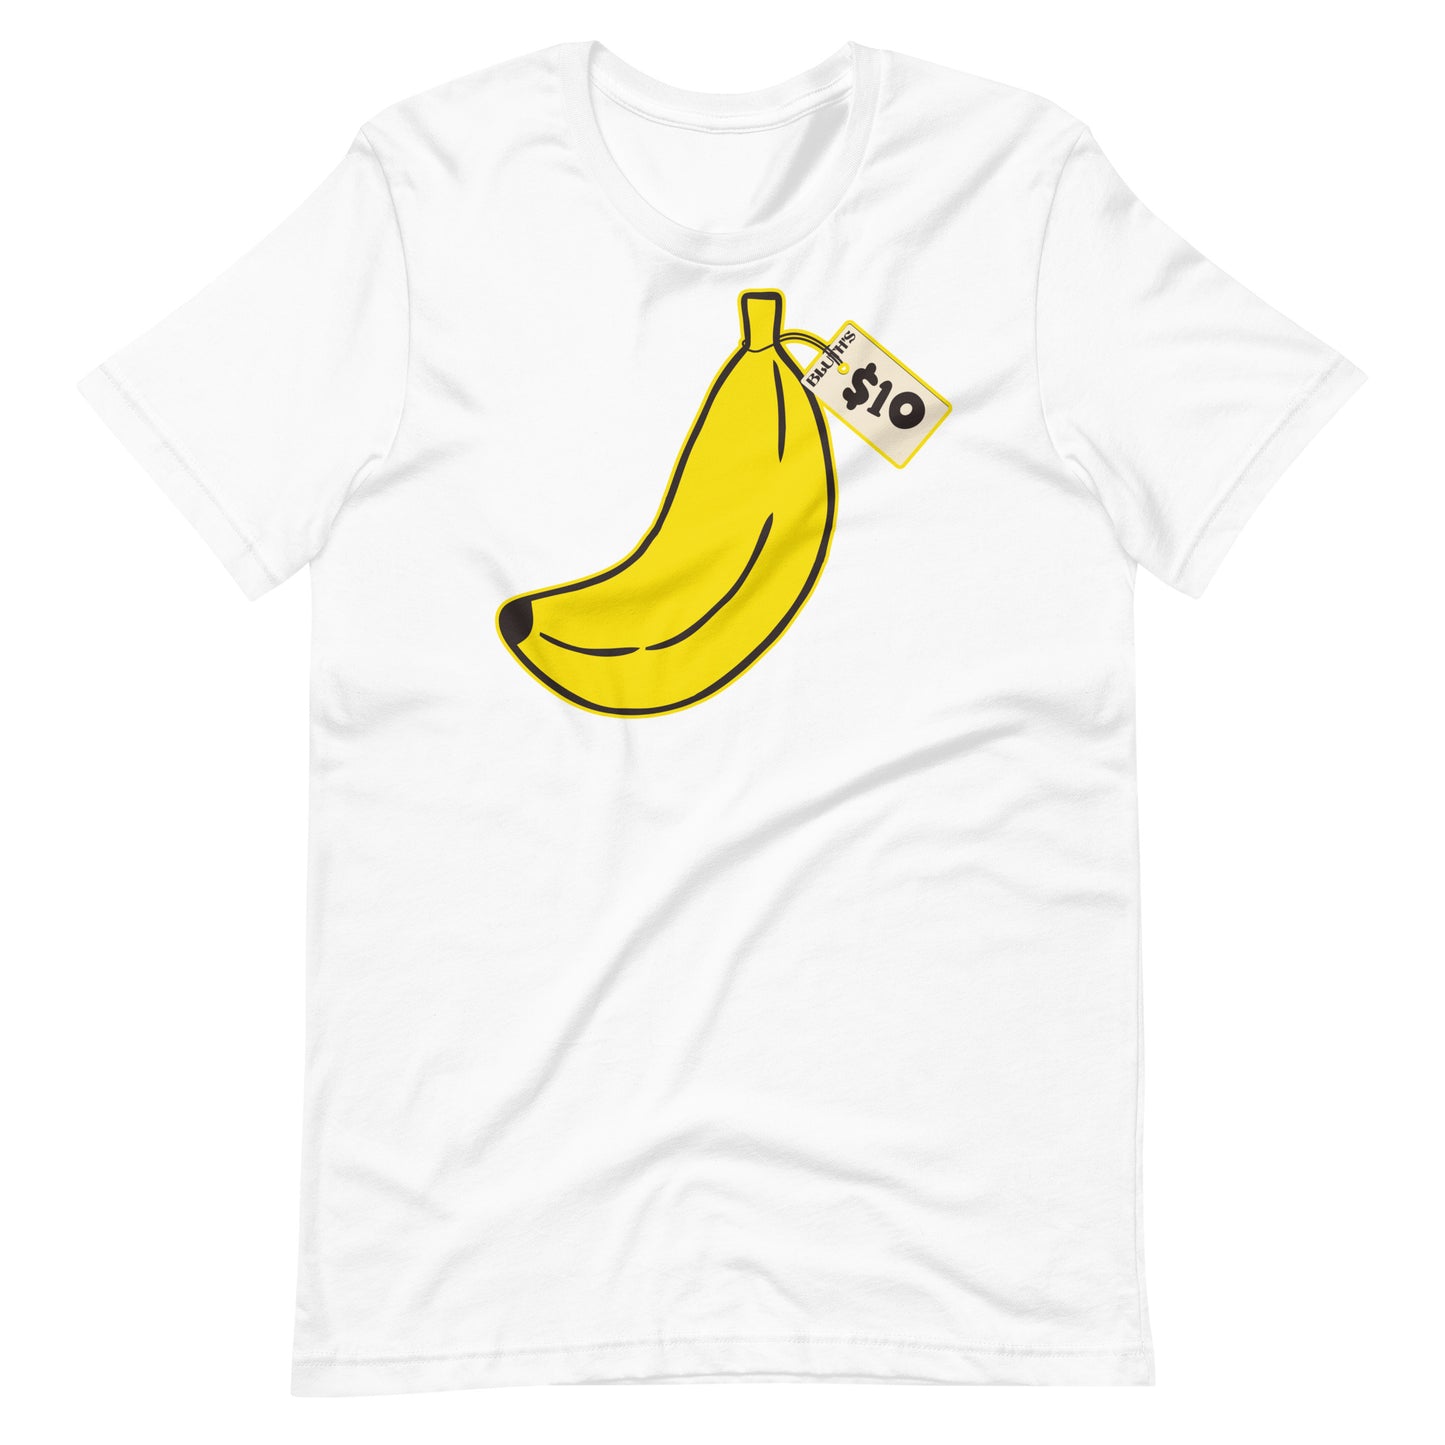 Lucile Bluth $10 Banana Unisex T-Shirt